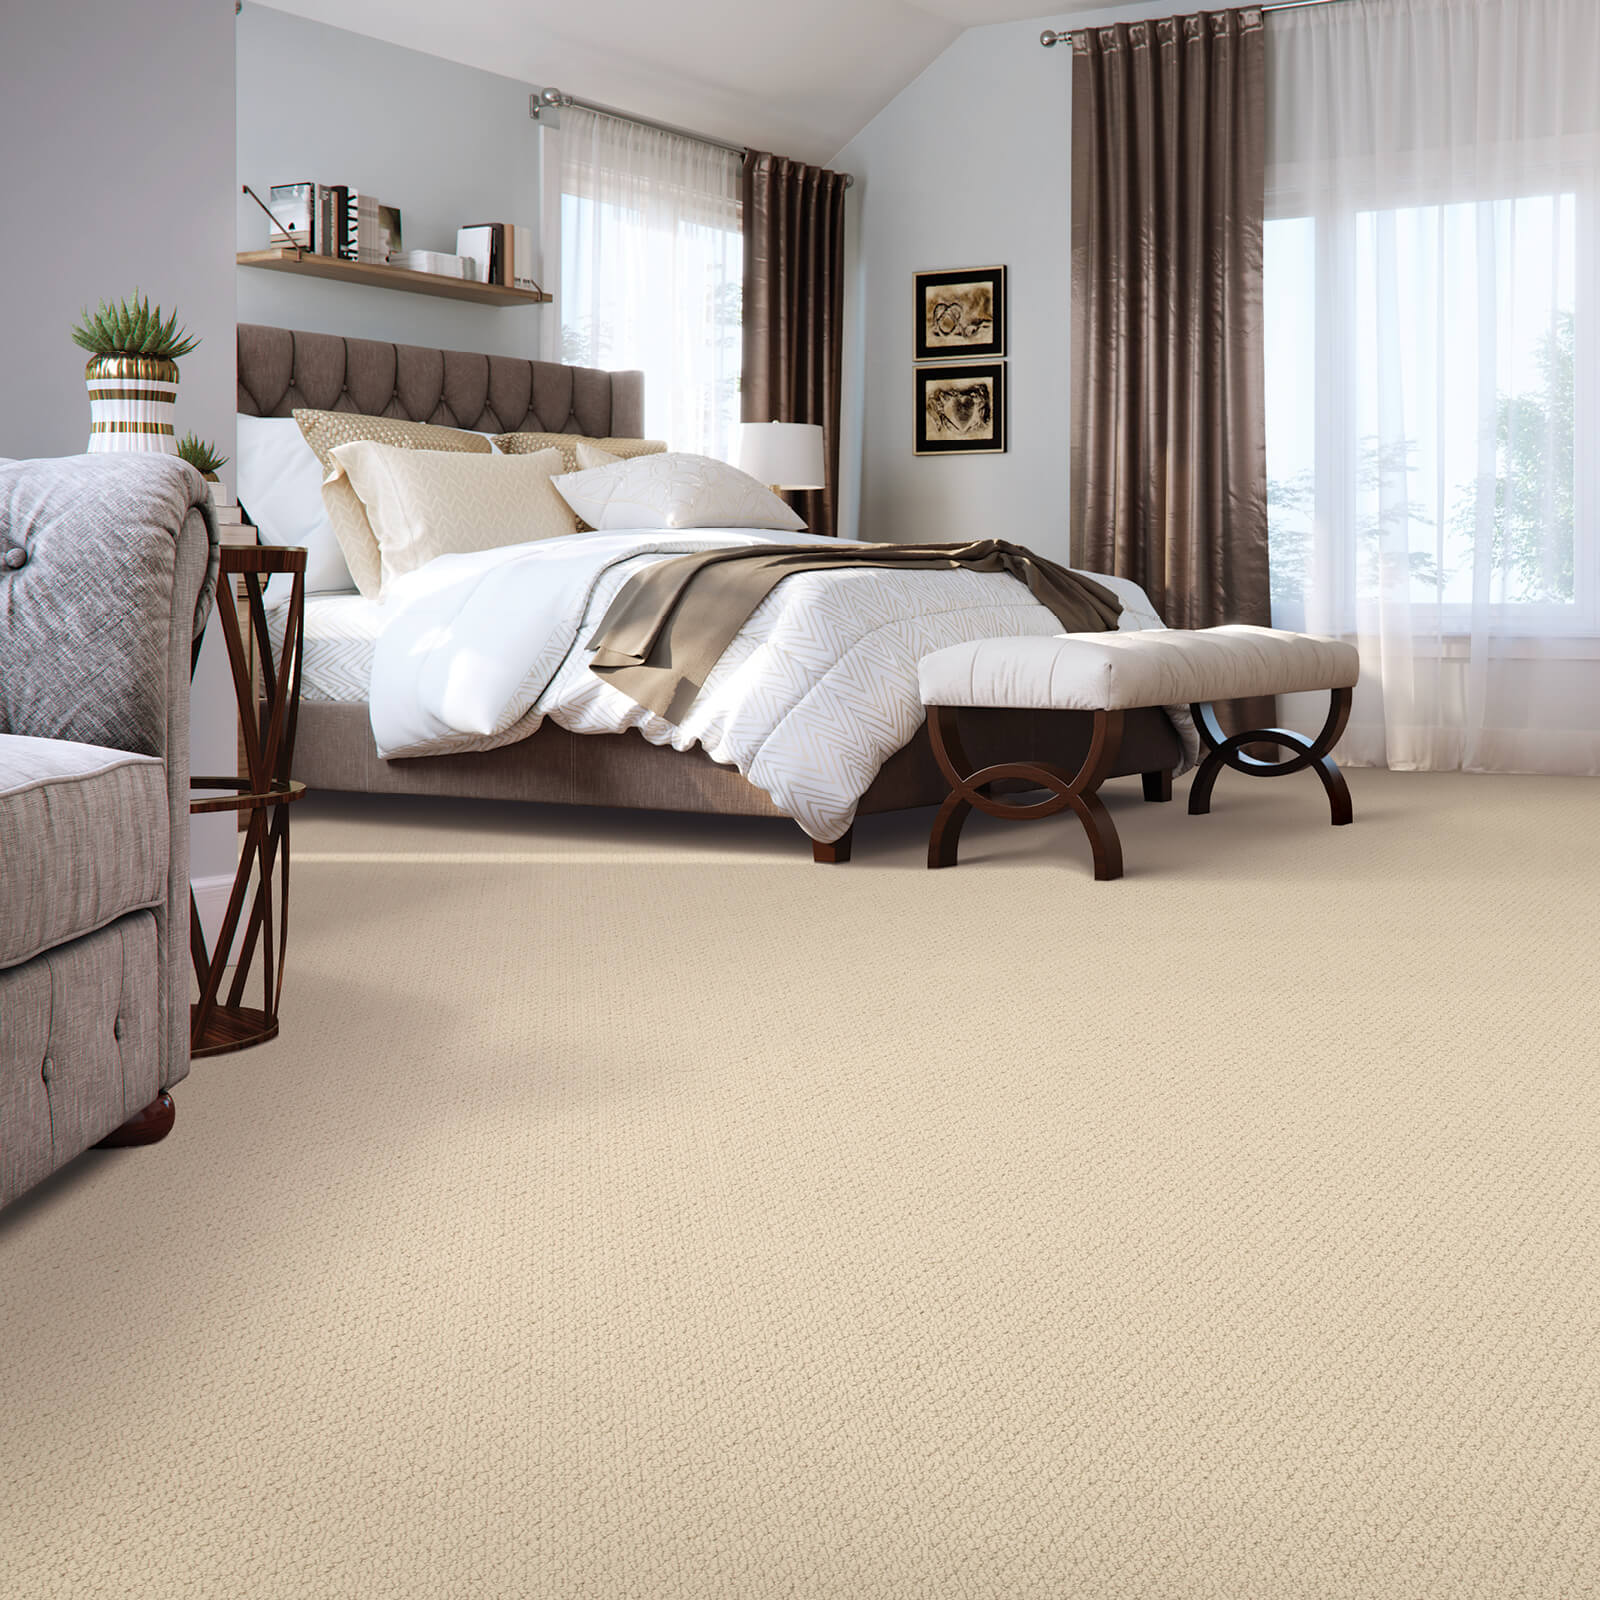 New carpet in bedroom | Georgia Flooring